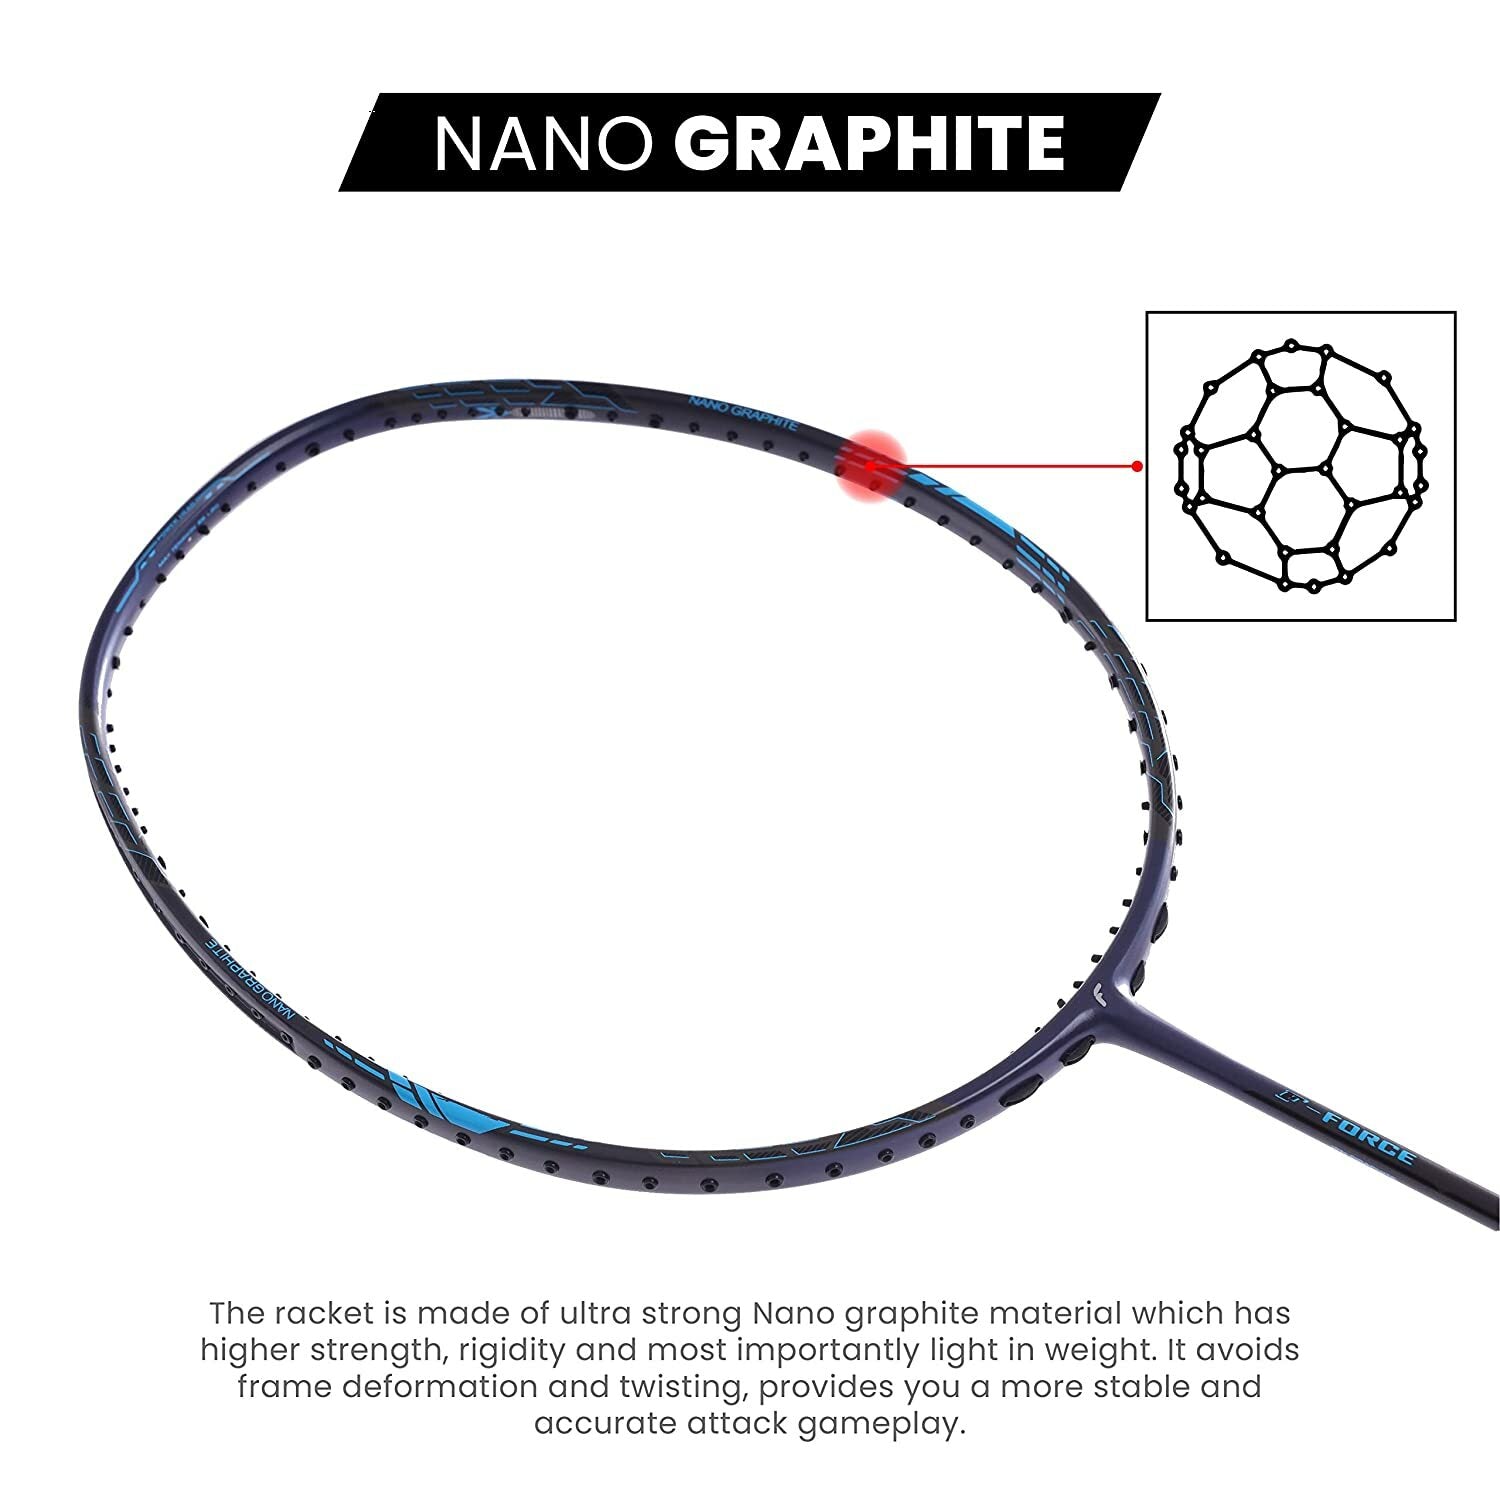 Flex Power F-Force Ultra Graphite Badminton Racquet Grey, Navy